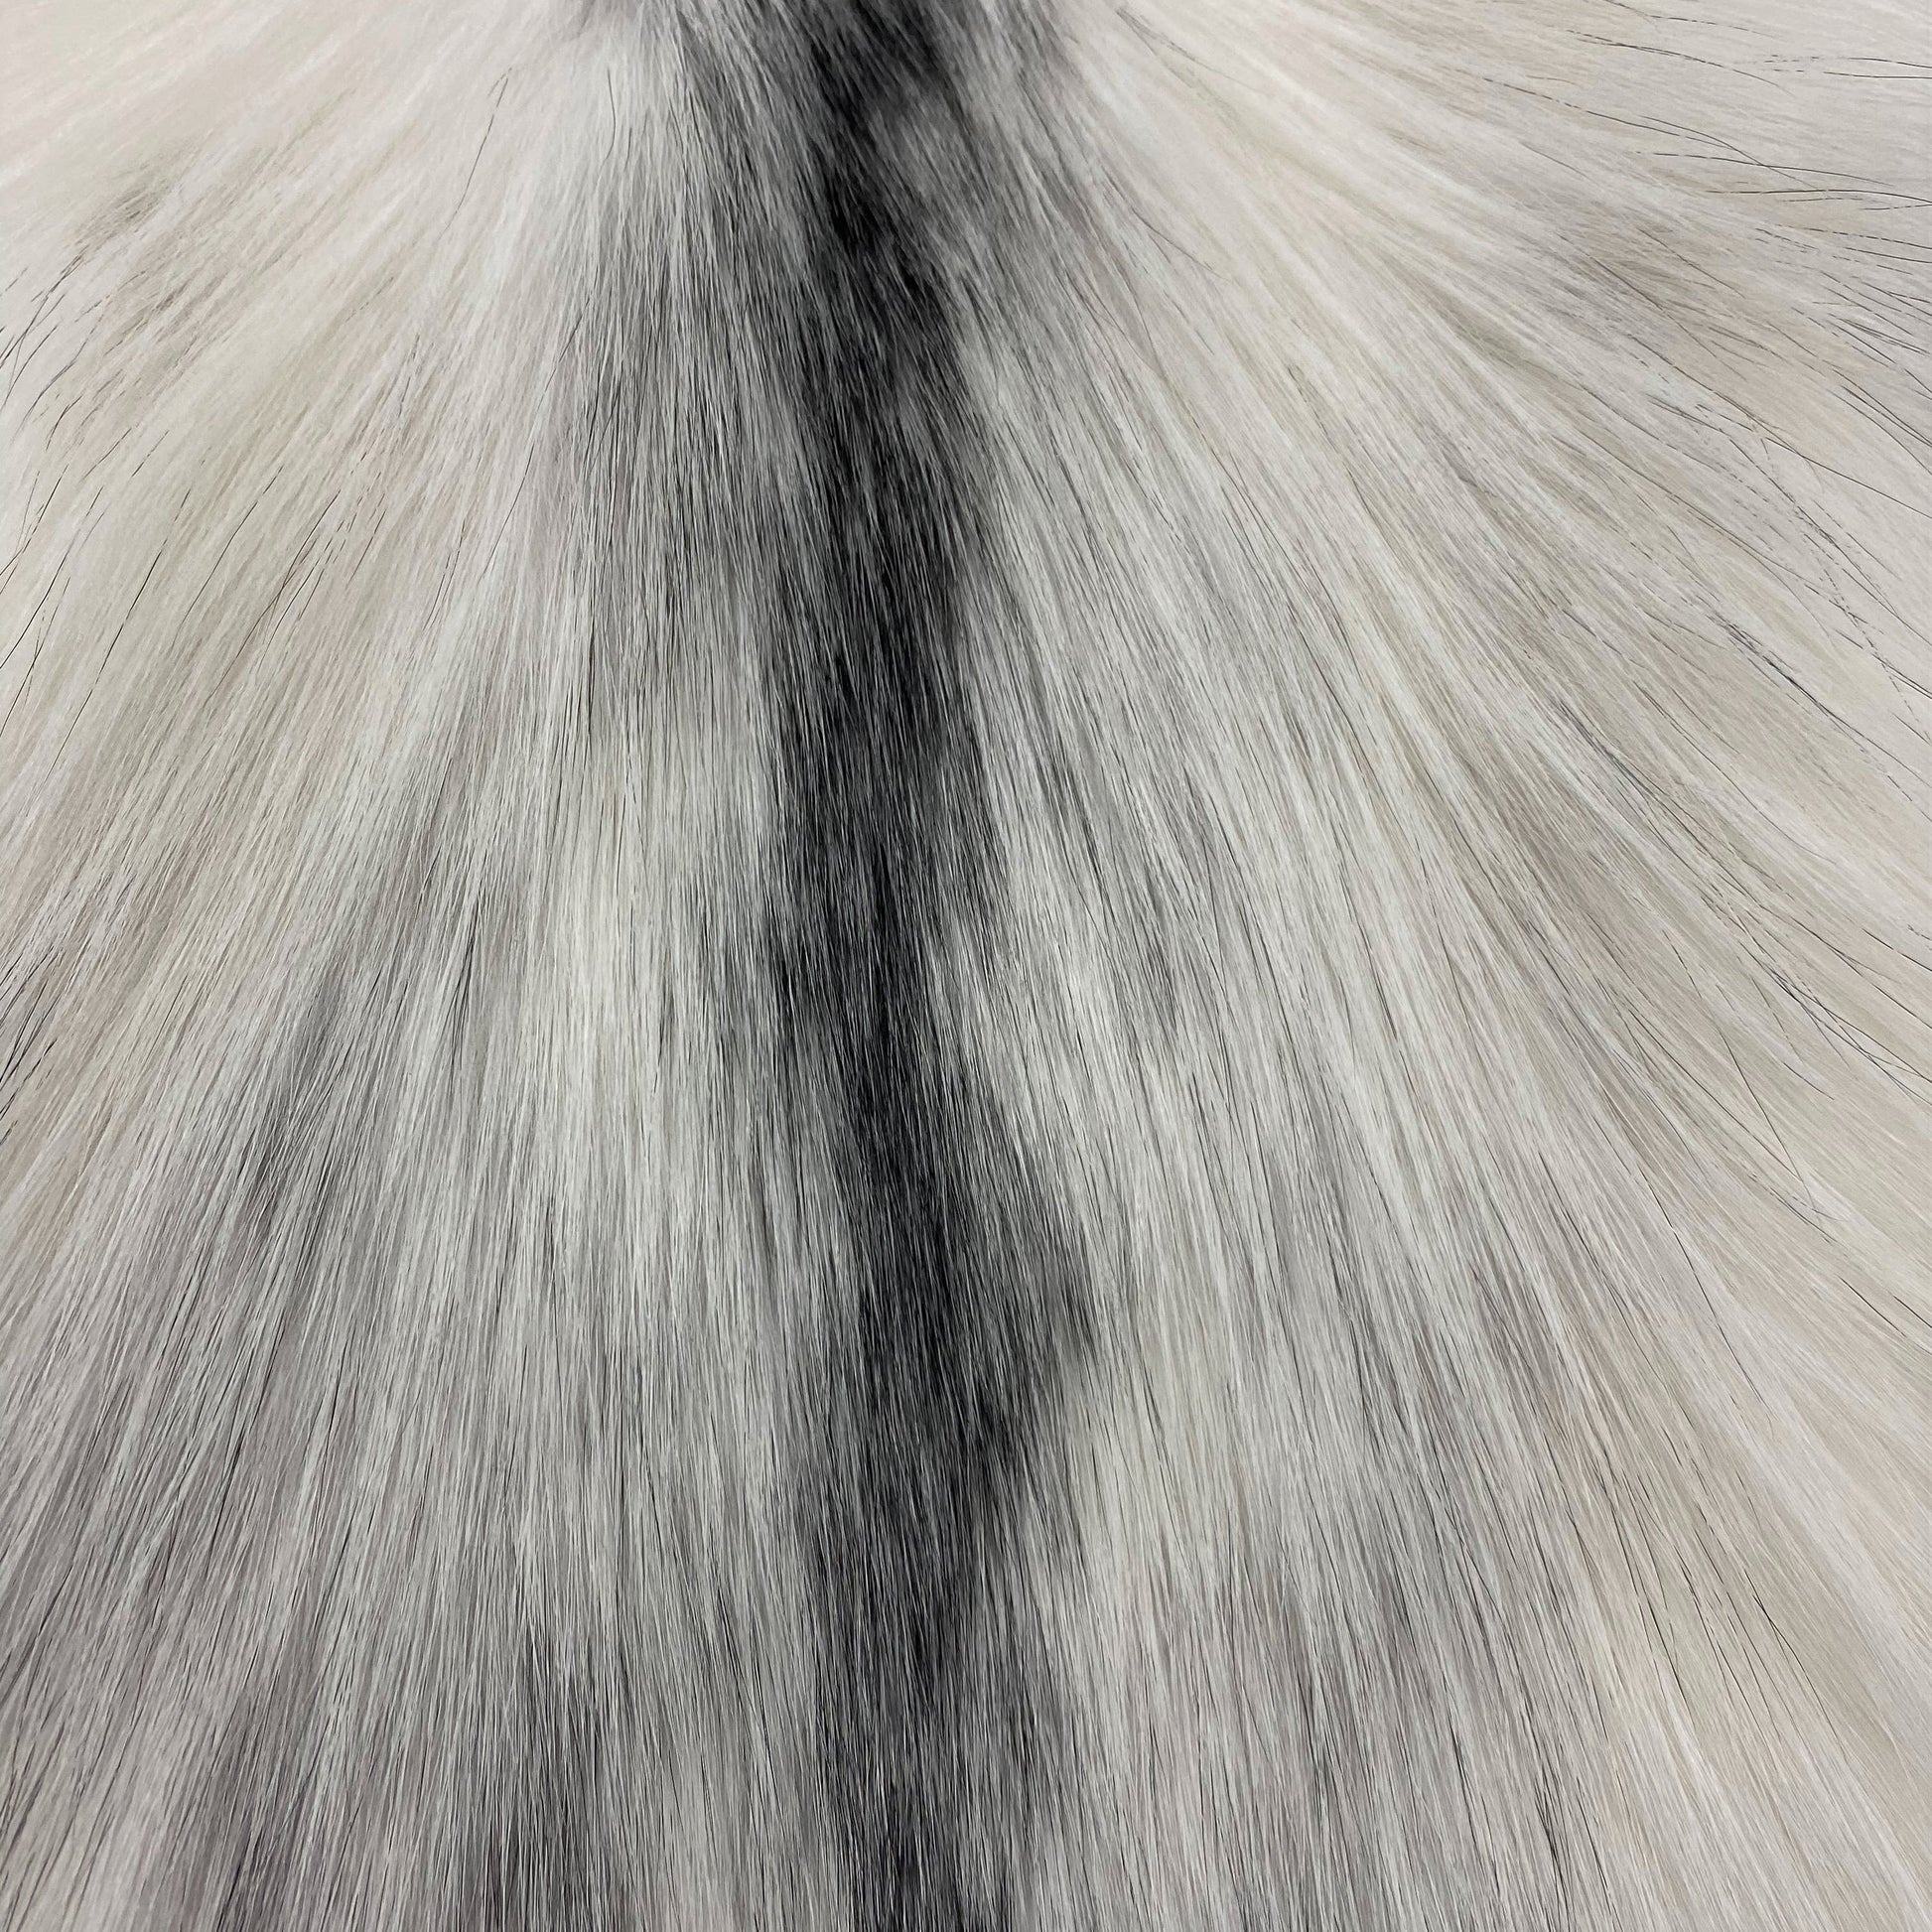 Arctic marble Fox fur (detail)